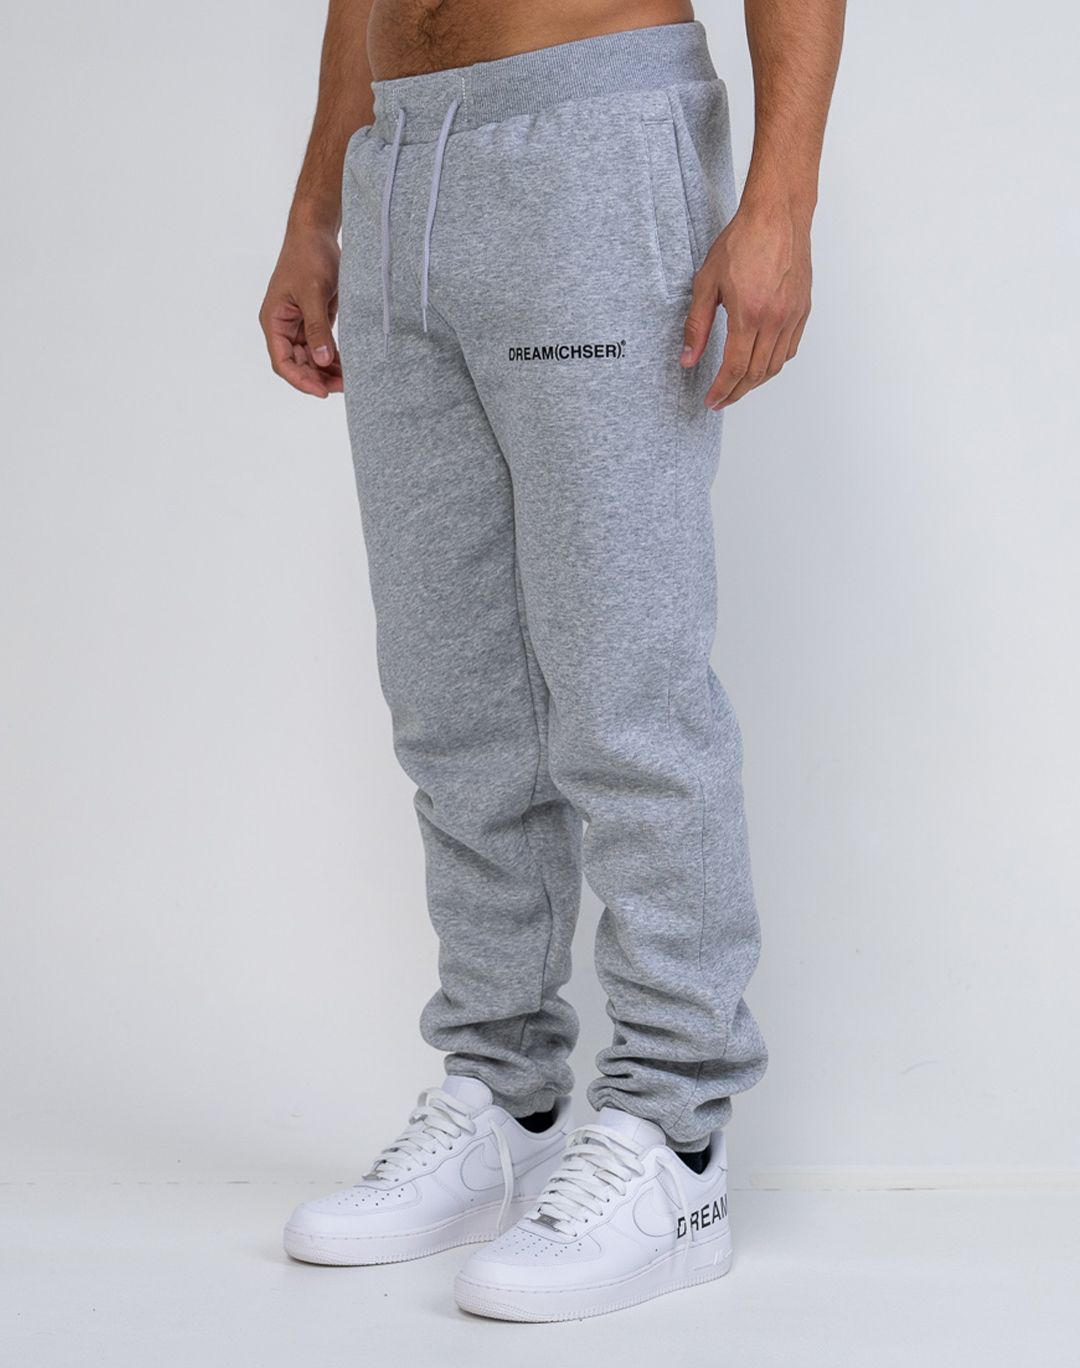 heather grey sweatpants